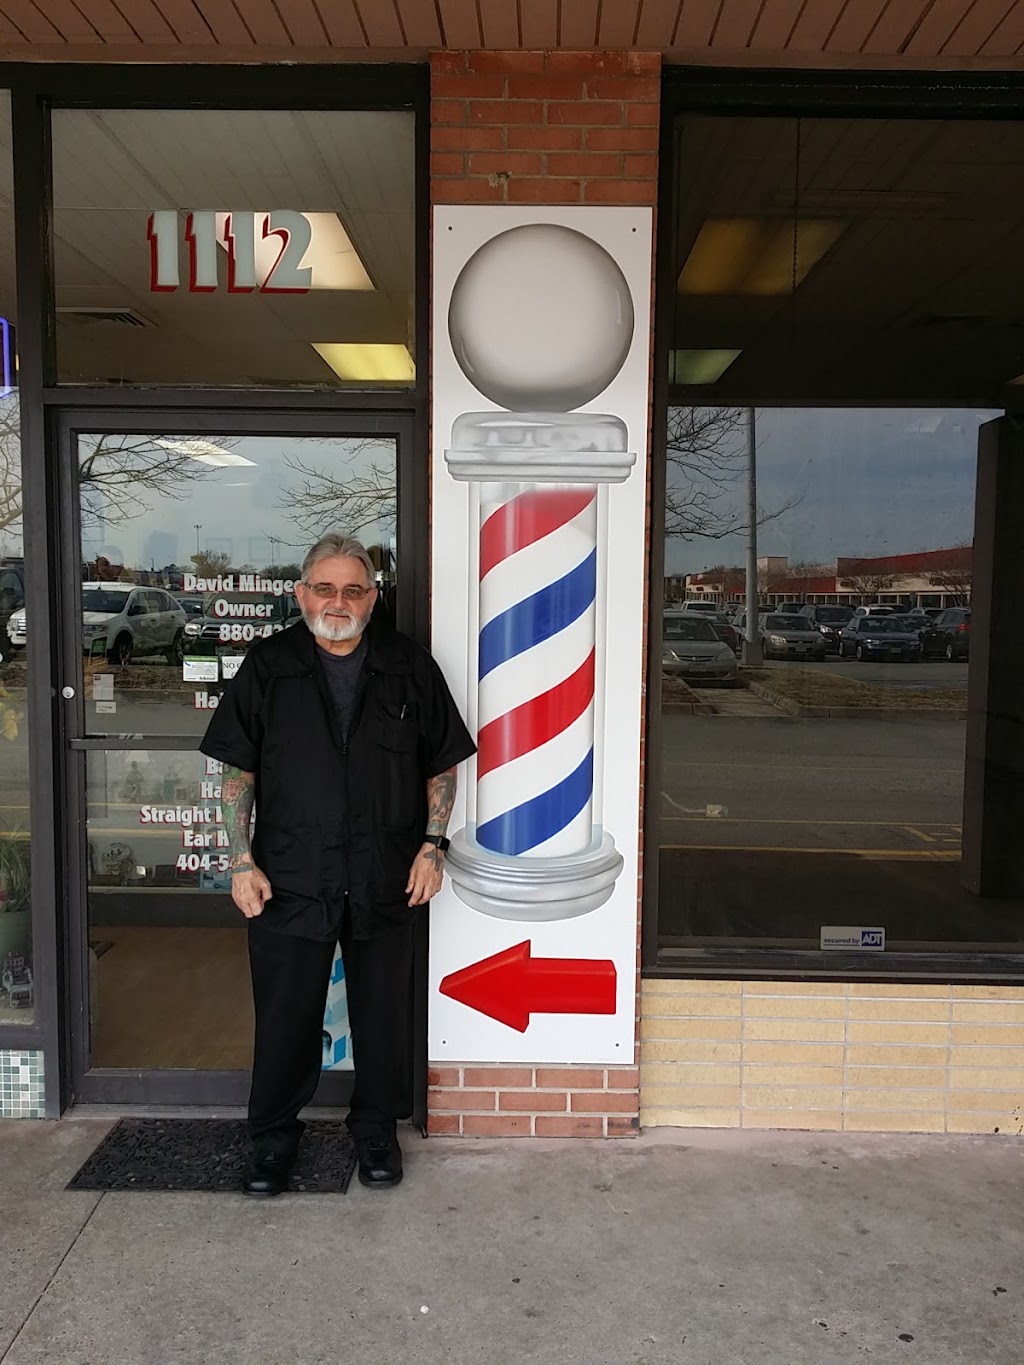 Daves Barber Shop | 1112 W Mercury Blvd, Hampton, VA 23666, USA | Phone: (757) 879-0471